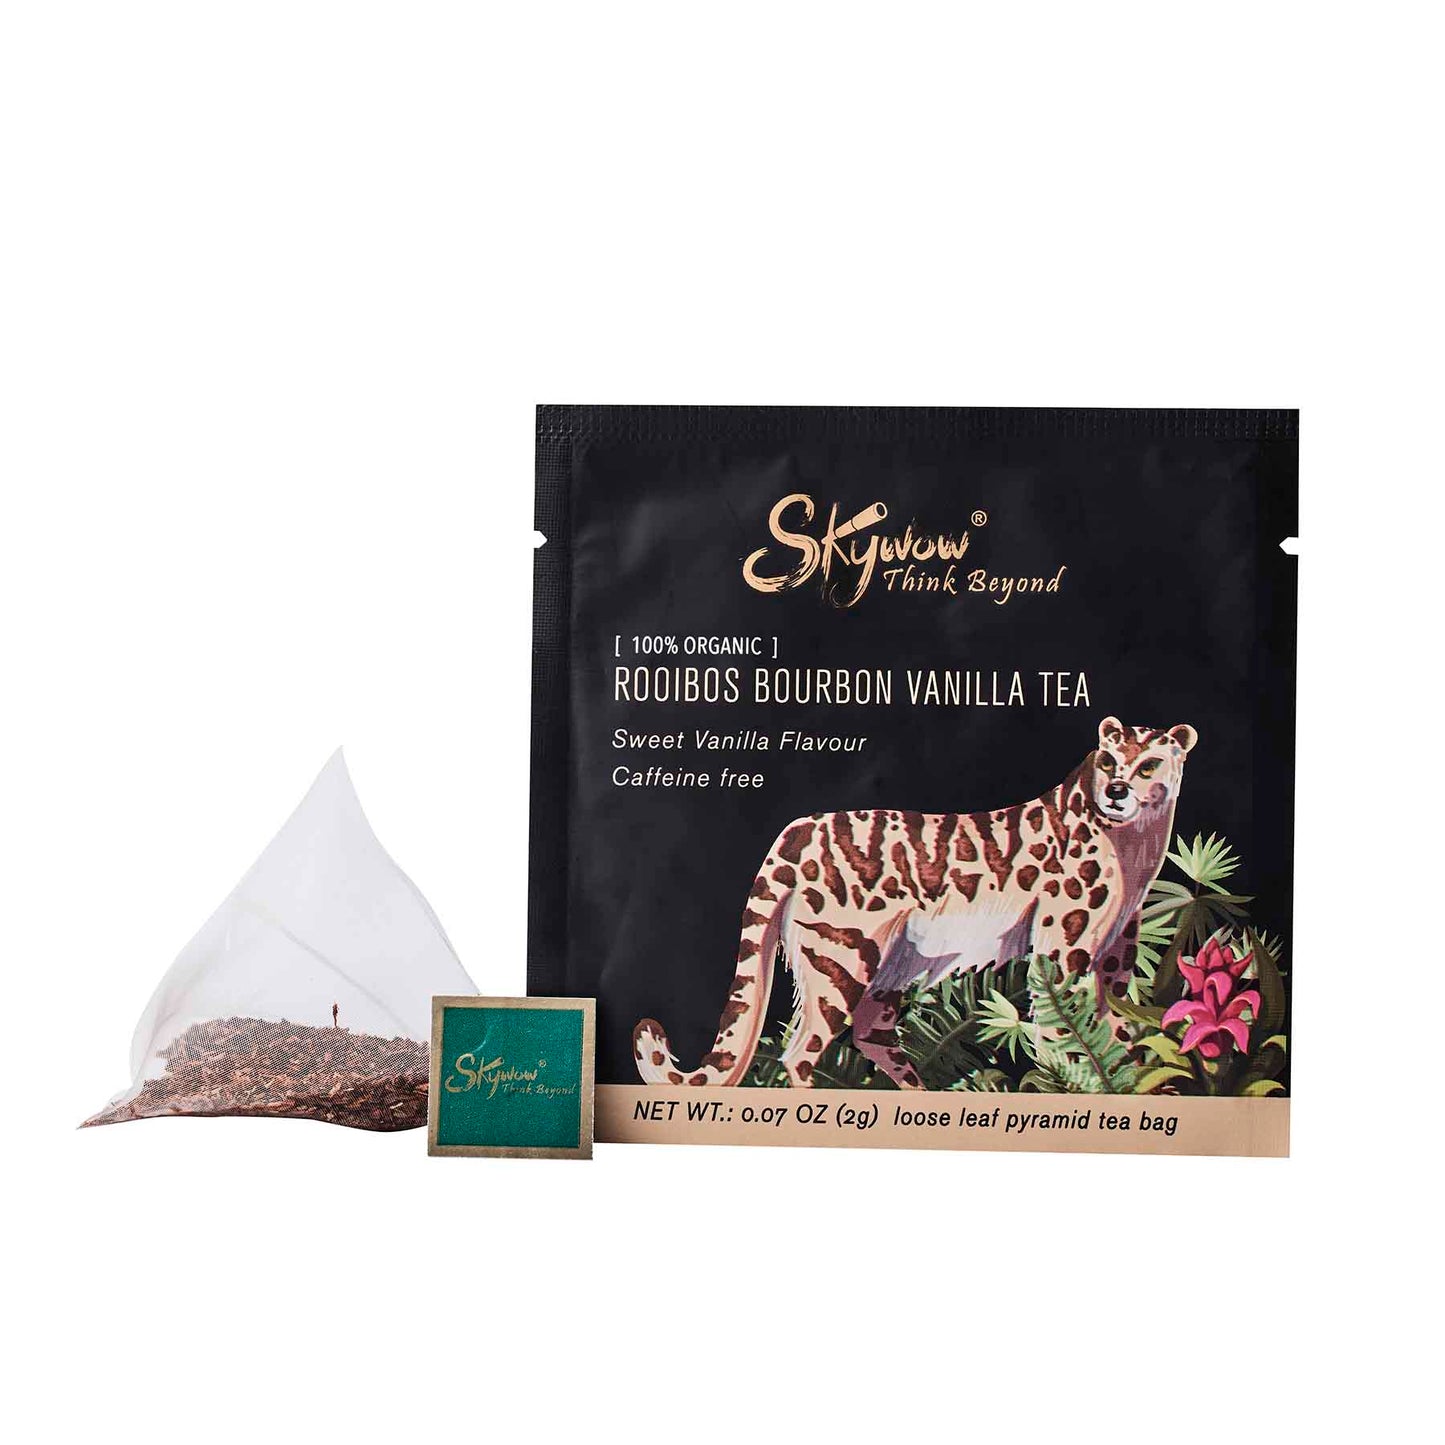 Skywow Organic Rooibos bourbon vanilla Tea, Individually packed pyramid teabags